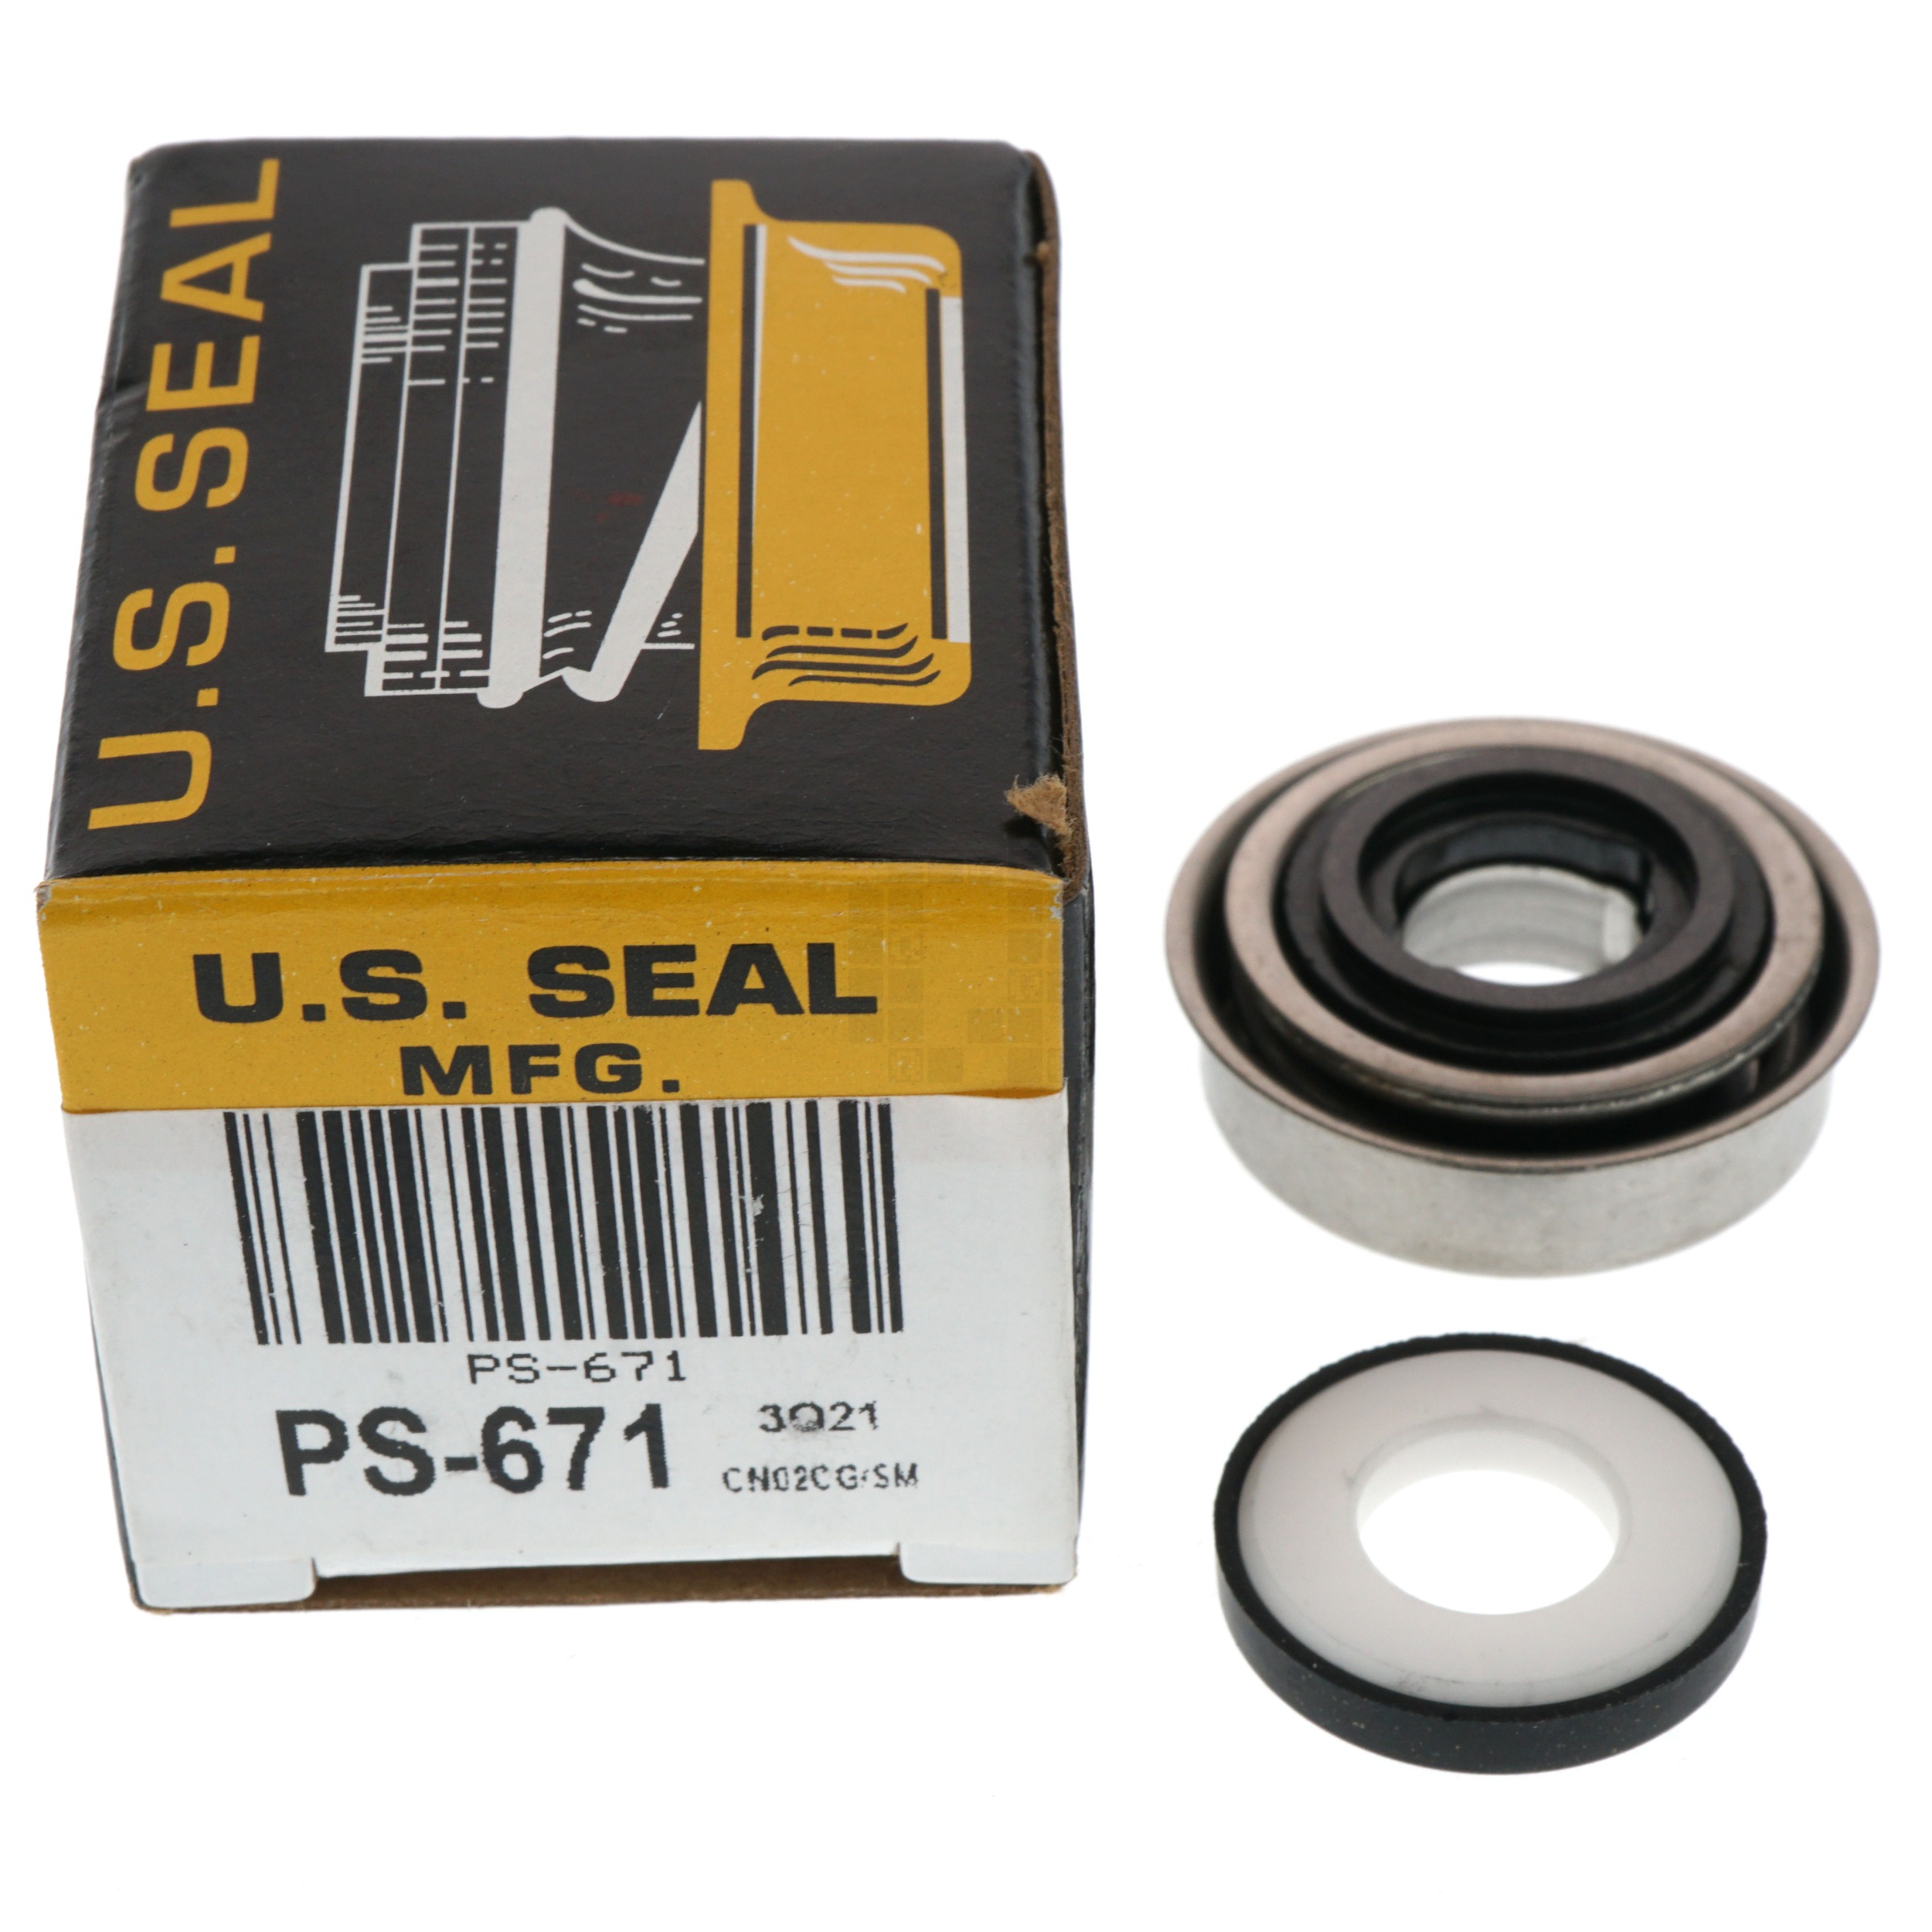 U.S. Seal Manufacturing PS-671 3/8" Pump Shaft Seal